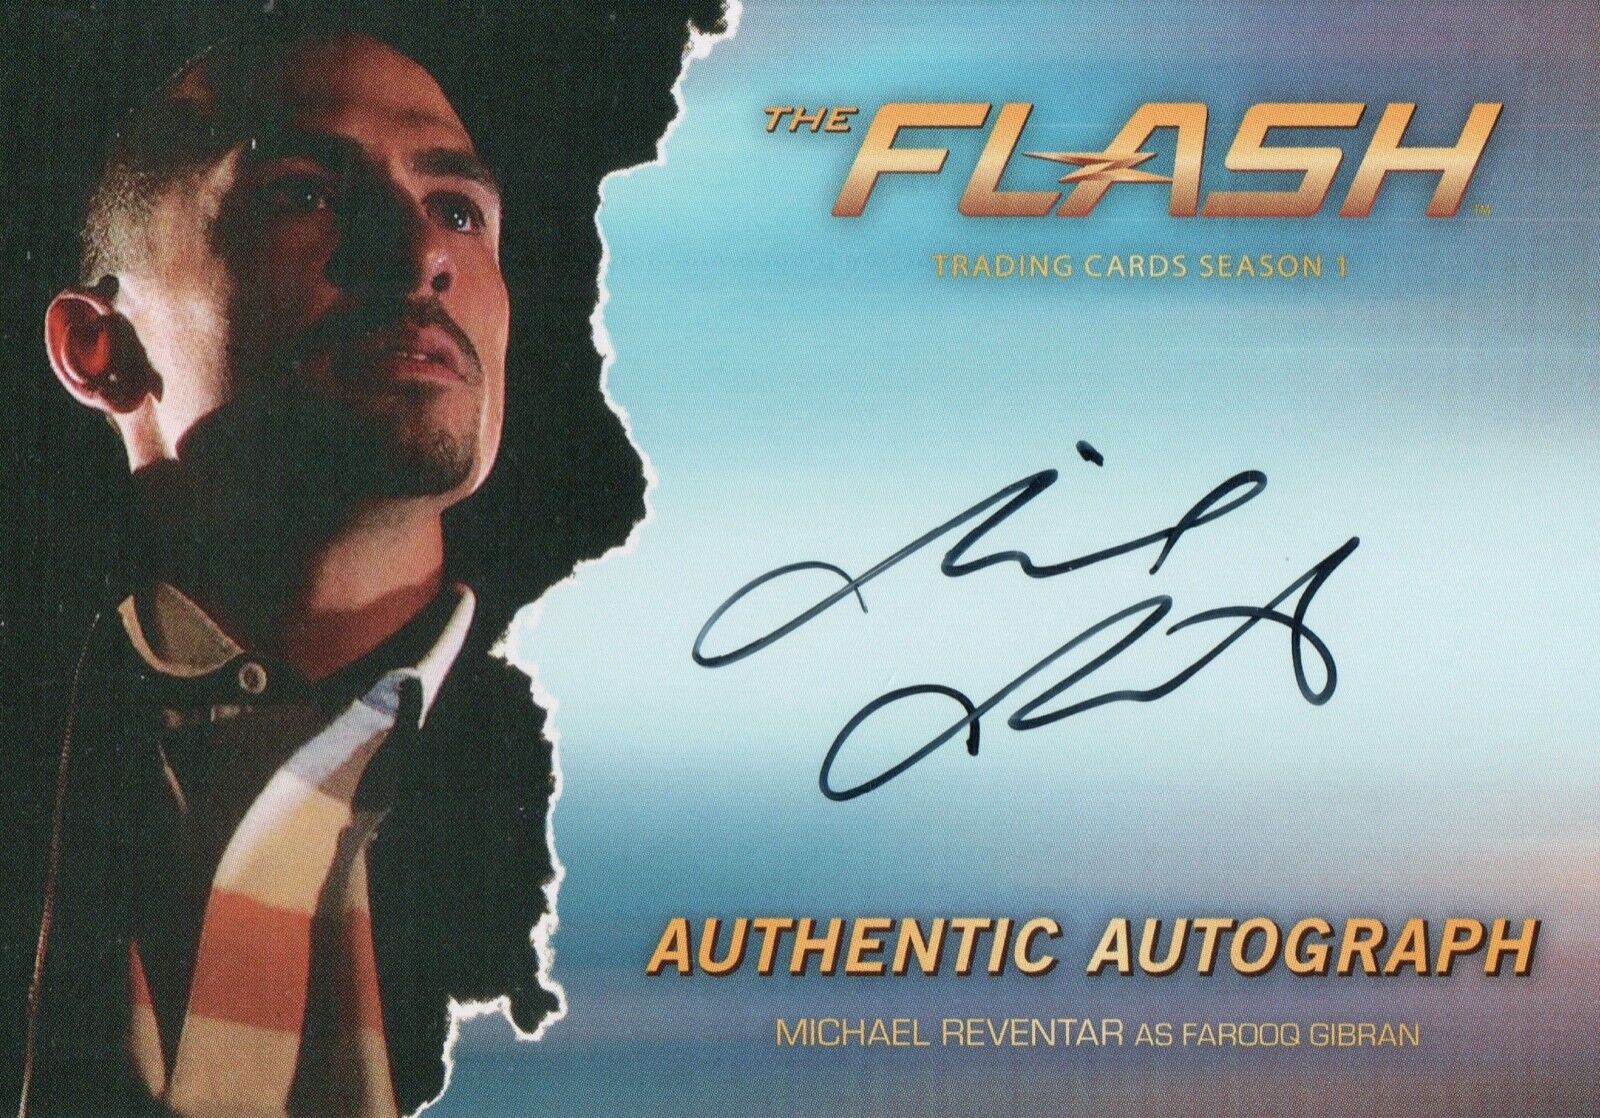 The Flash Season 1, Michael Reventar ‘Farooq Gibran’ Autograph Card 